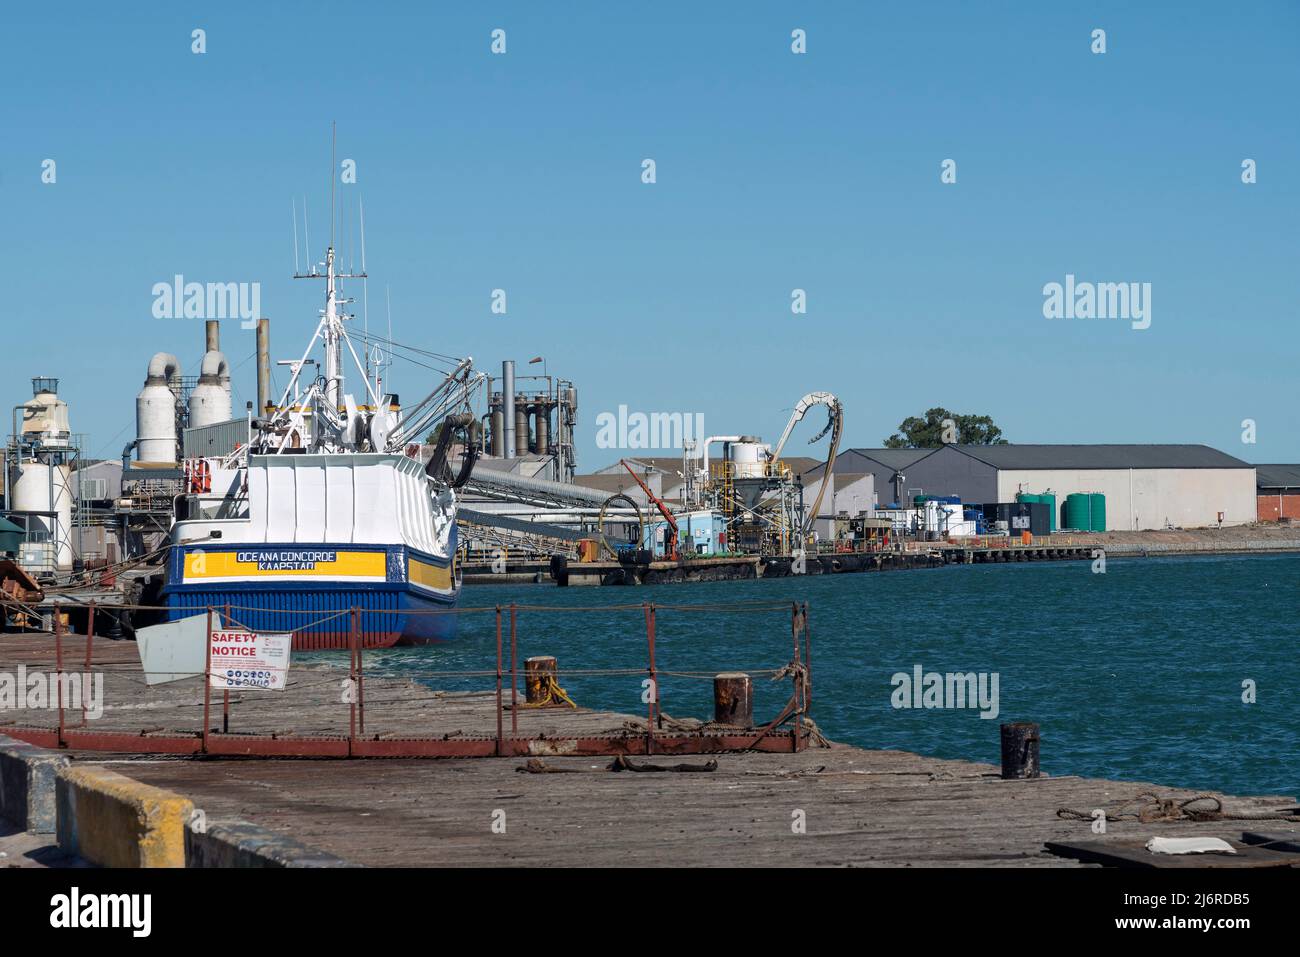 Velddrif, Region Laaiplek Westküste, Südafrika. 2022. Fischfabrik am Hafen Velddrif entlang der Westküste, Fischerboot daneben. Stockfoto